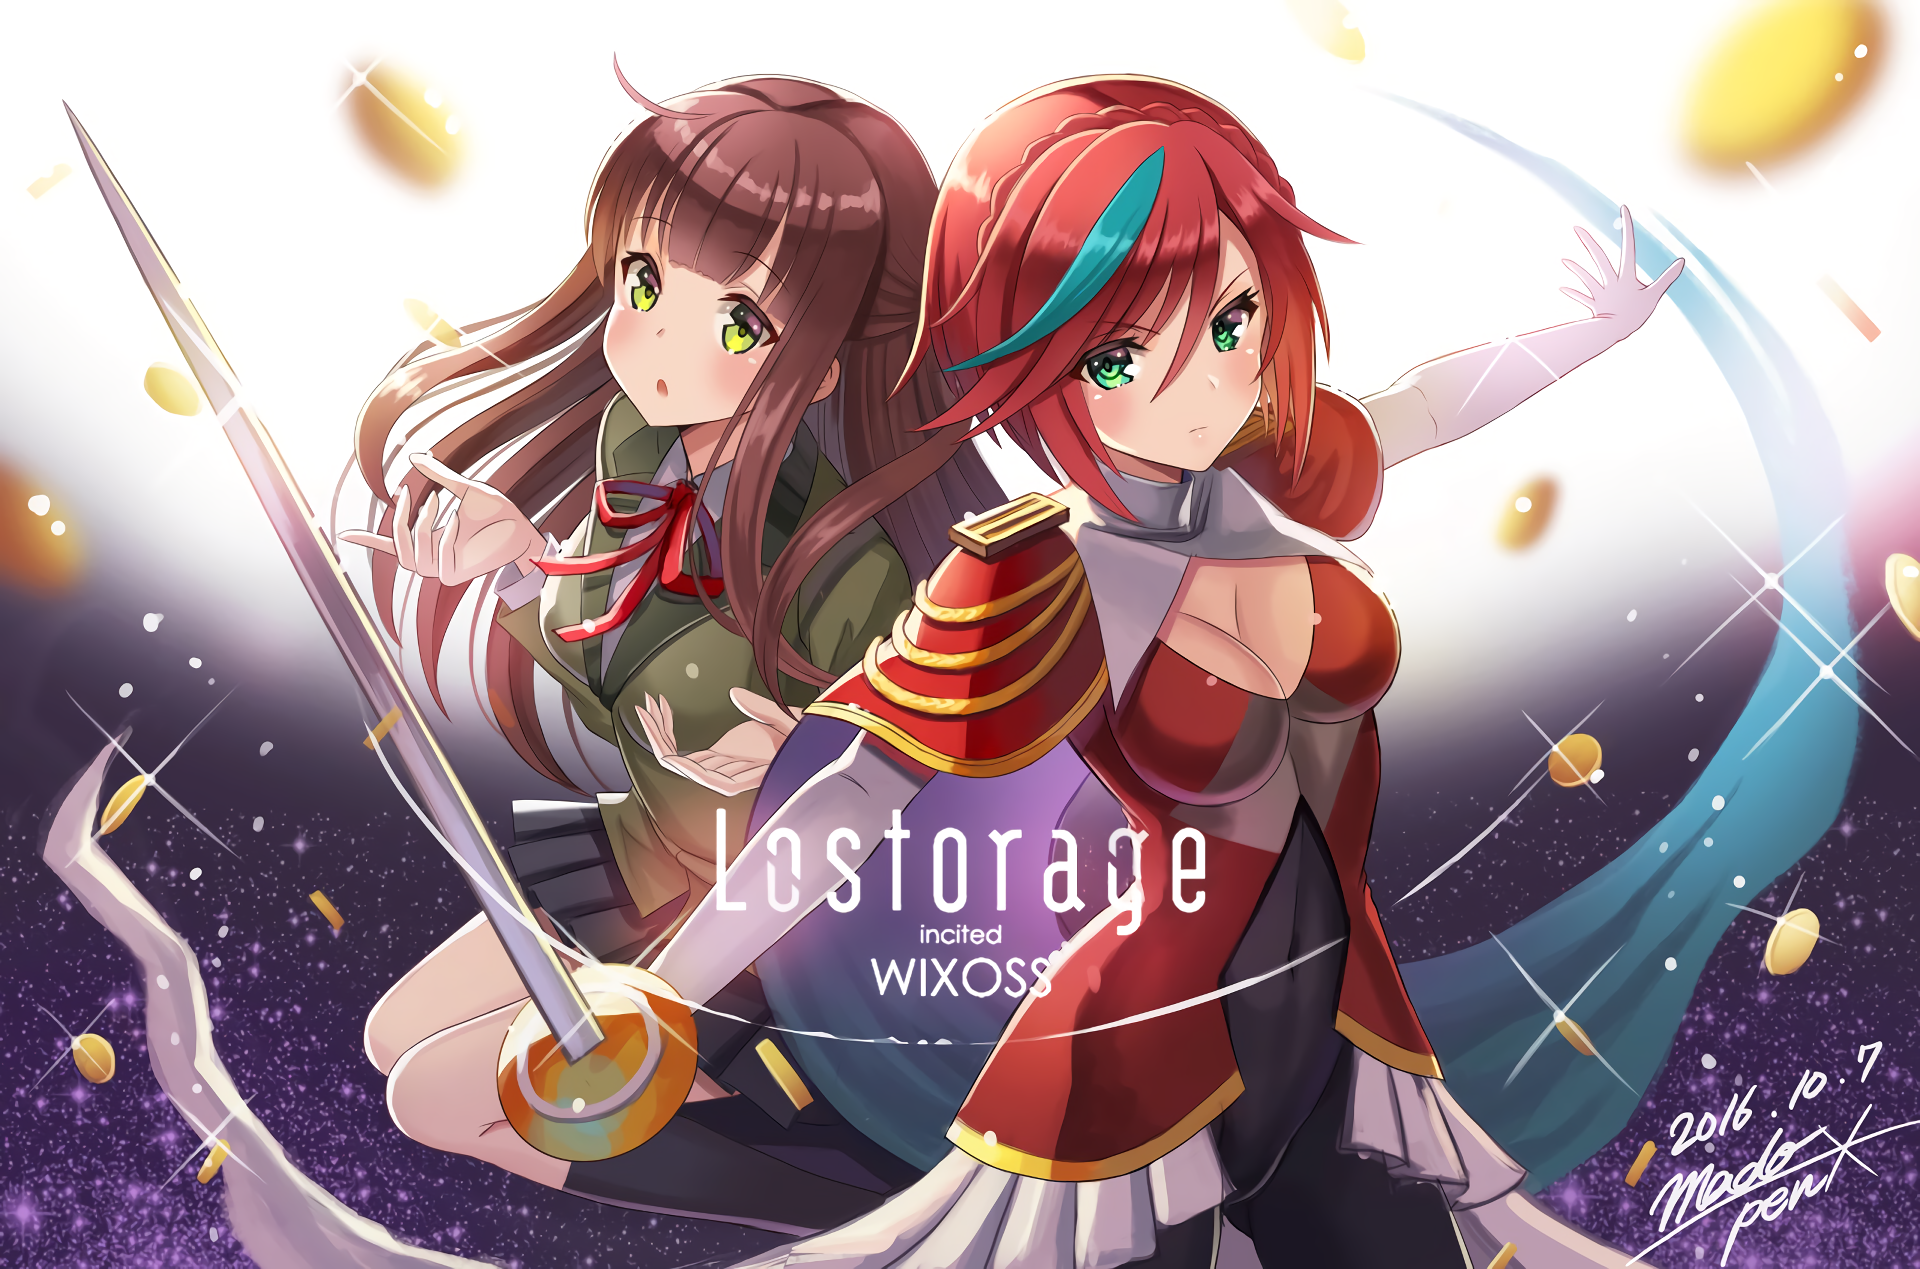 Lostorage Incited WIXOSS Episode 11 Review – “The Two / Suzuko and  Chinatsu” | The Lily Garden